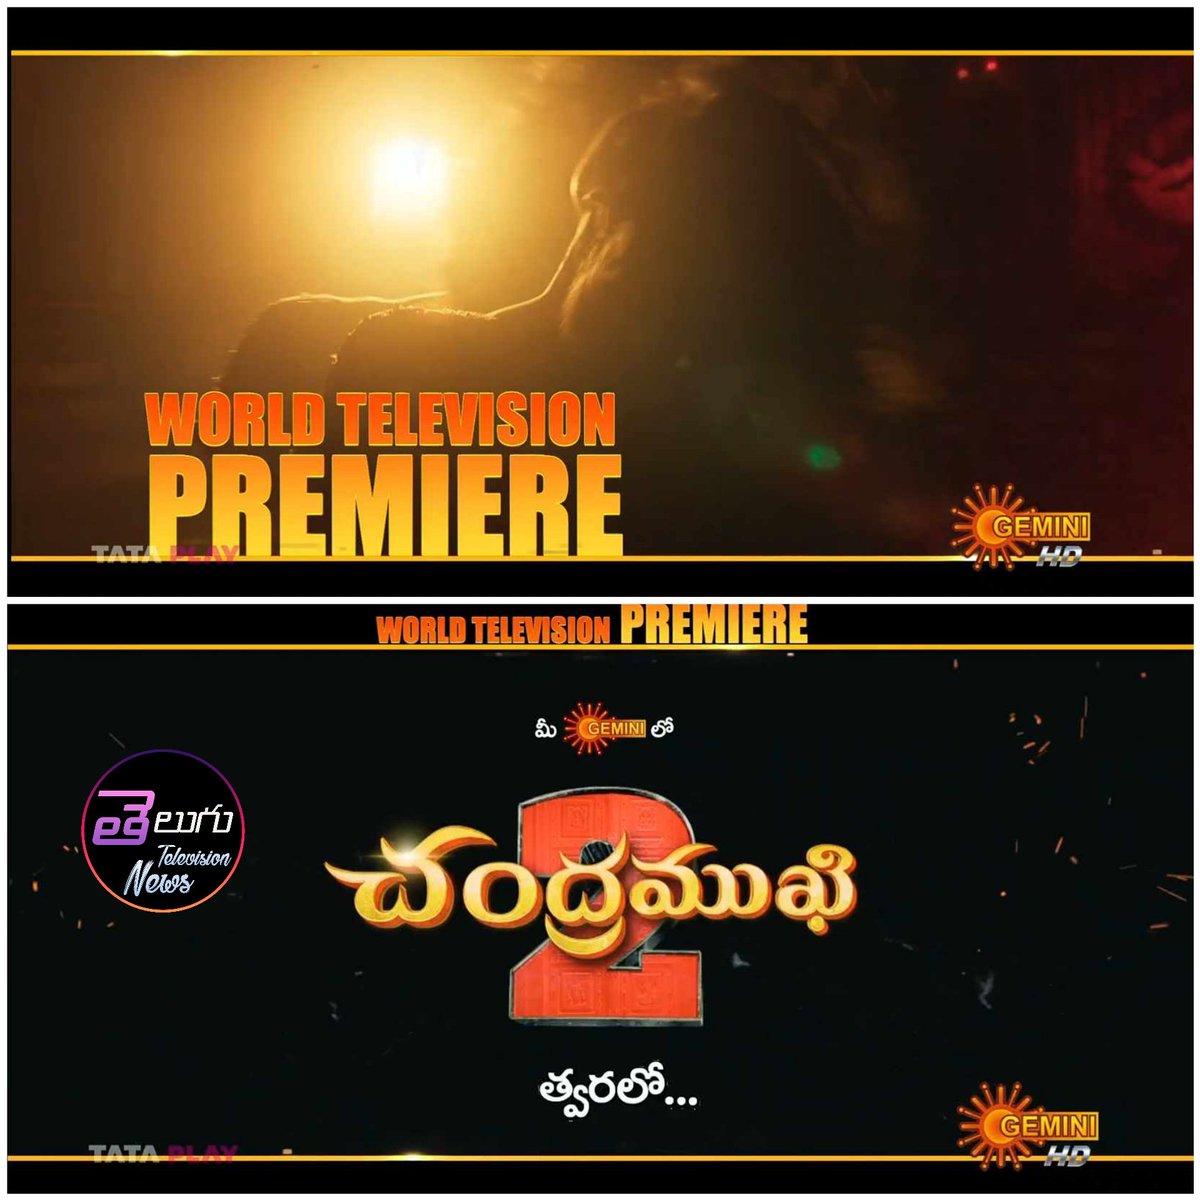 World television premiere
#Chandramukhi2 
Coming Soon on #GeminiTV 

#RaghavaLawrence #KanganaRanaut #vadivelu #MahimaNambiar #SrushtiDange #RadhikaSarathkumar